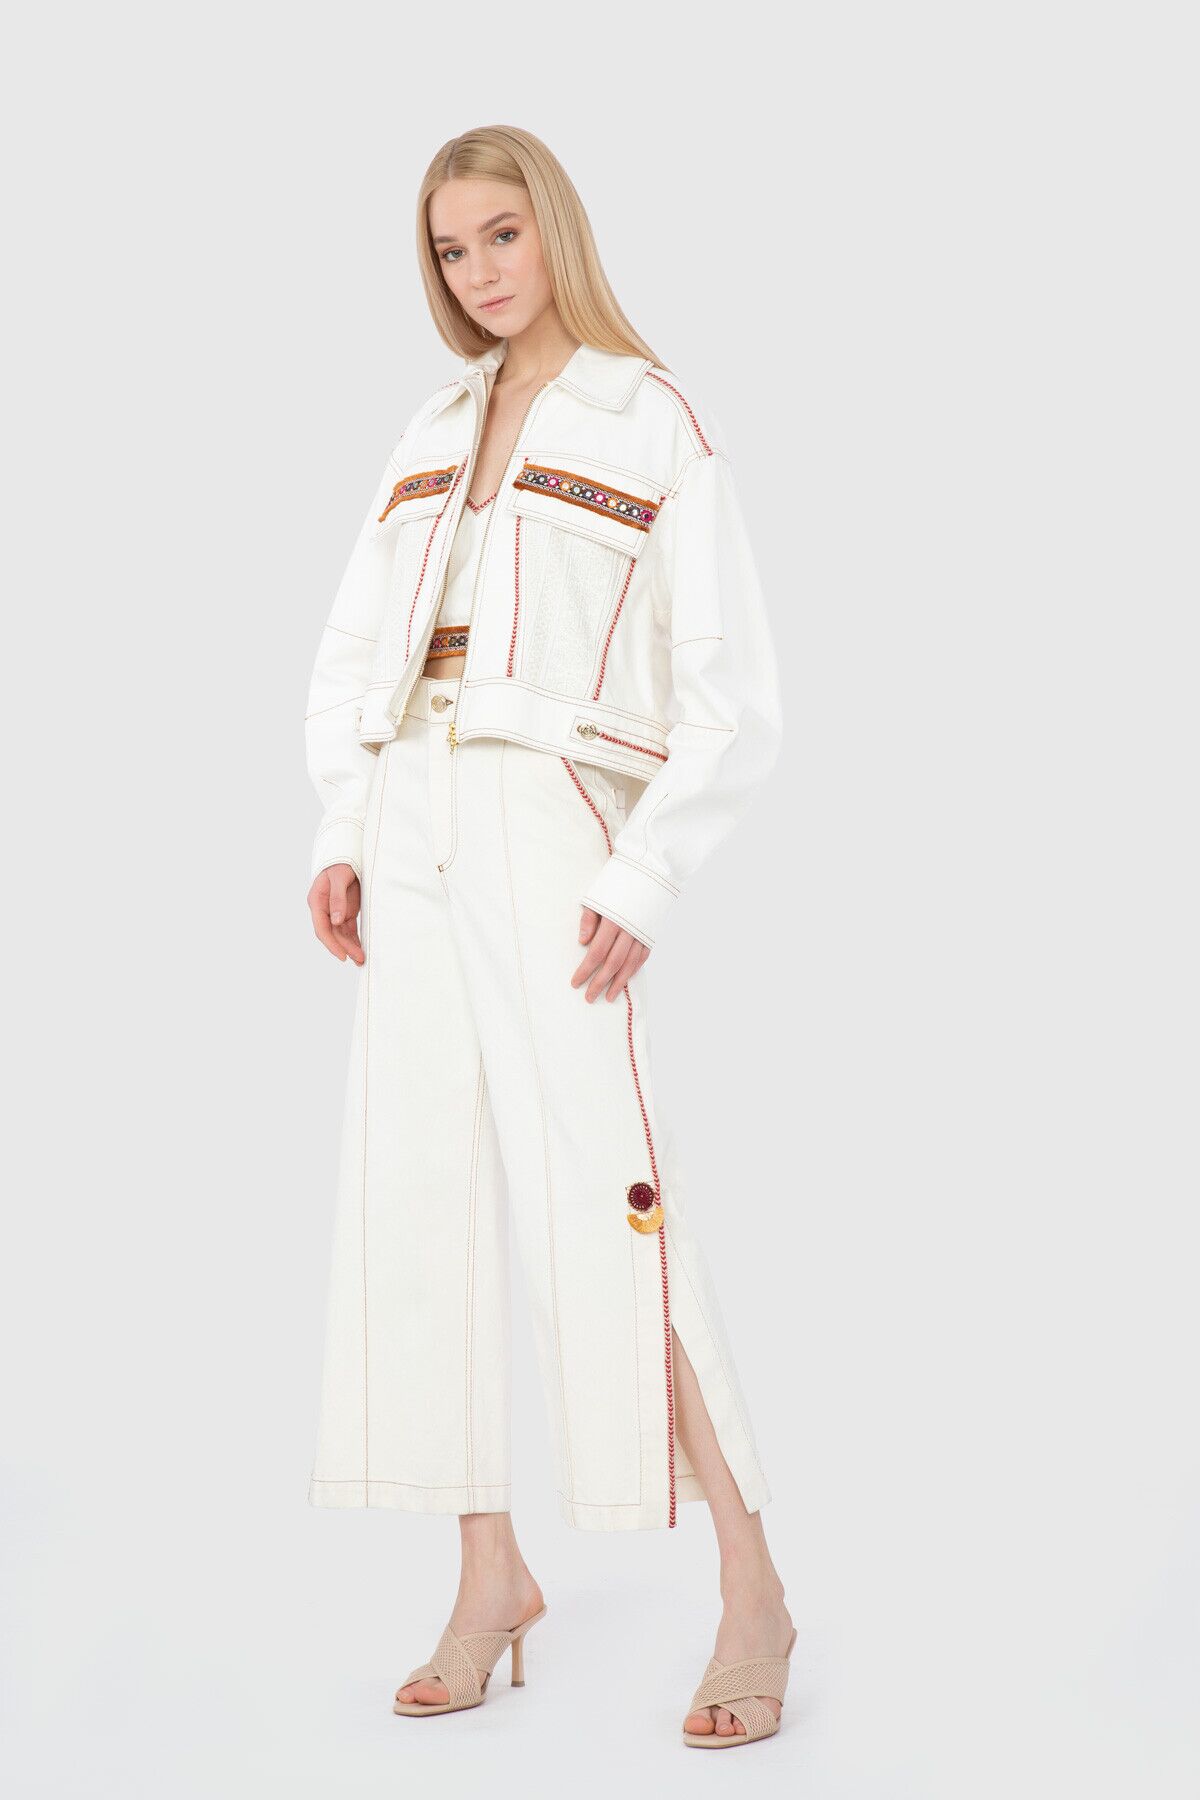  GIZIA - Ethnic Stripe Accessory Detail Contrast Fabric White Jacket